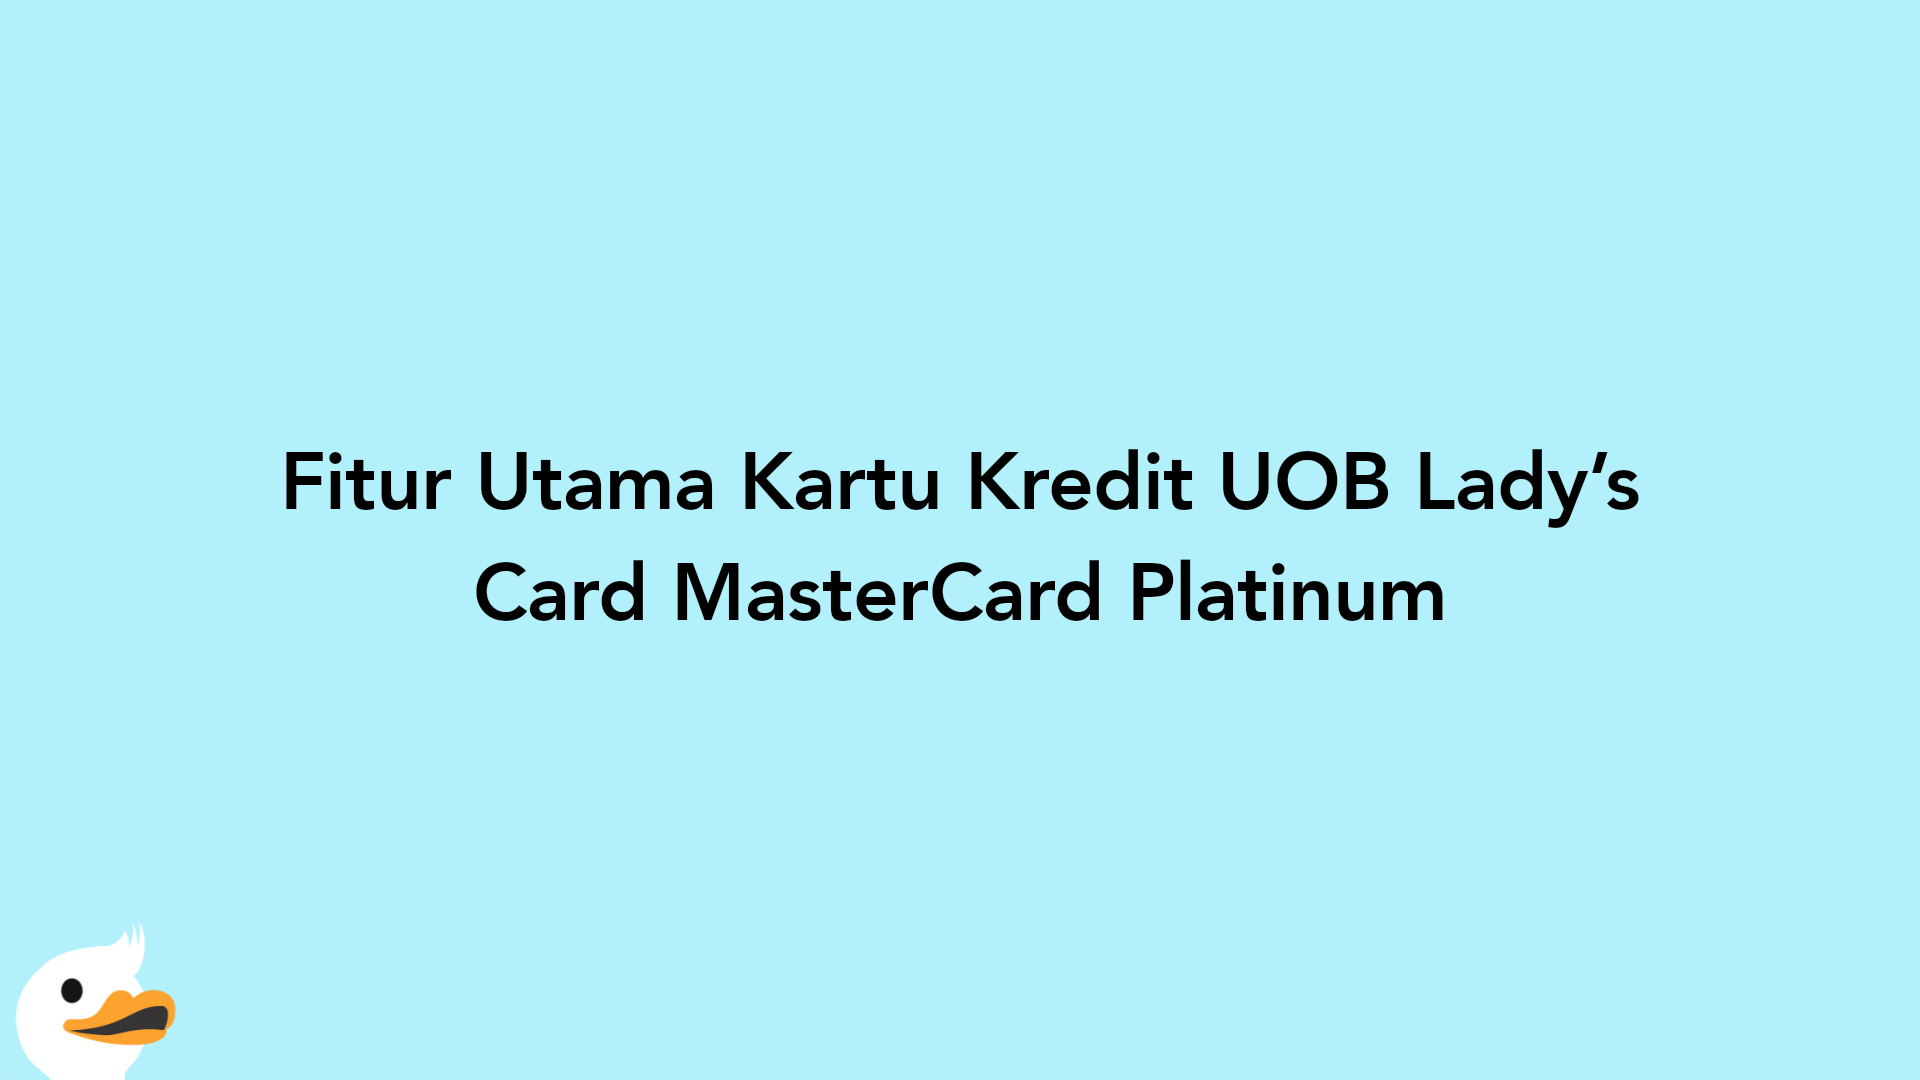 Fitur Utama Kartu Kredit UOB Lady’s Card MasterCard Platinum